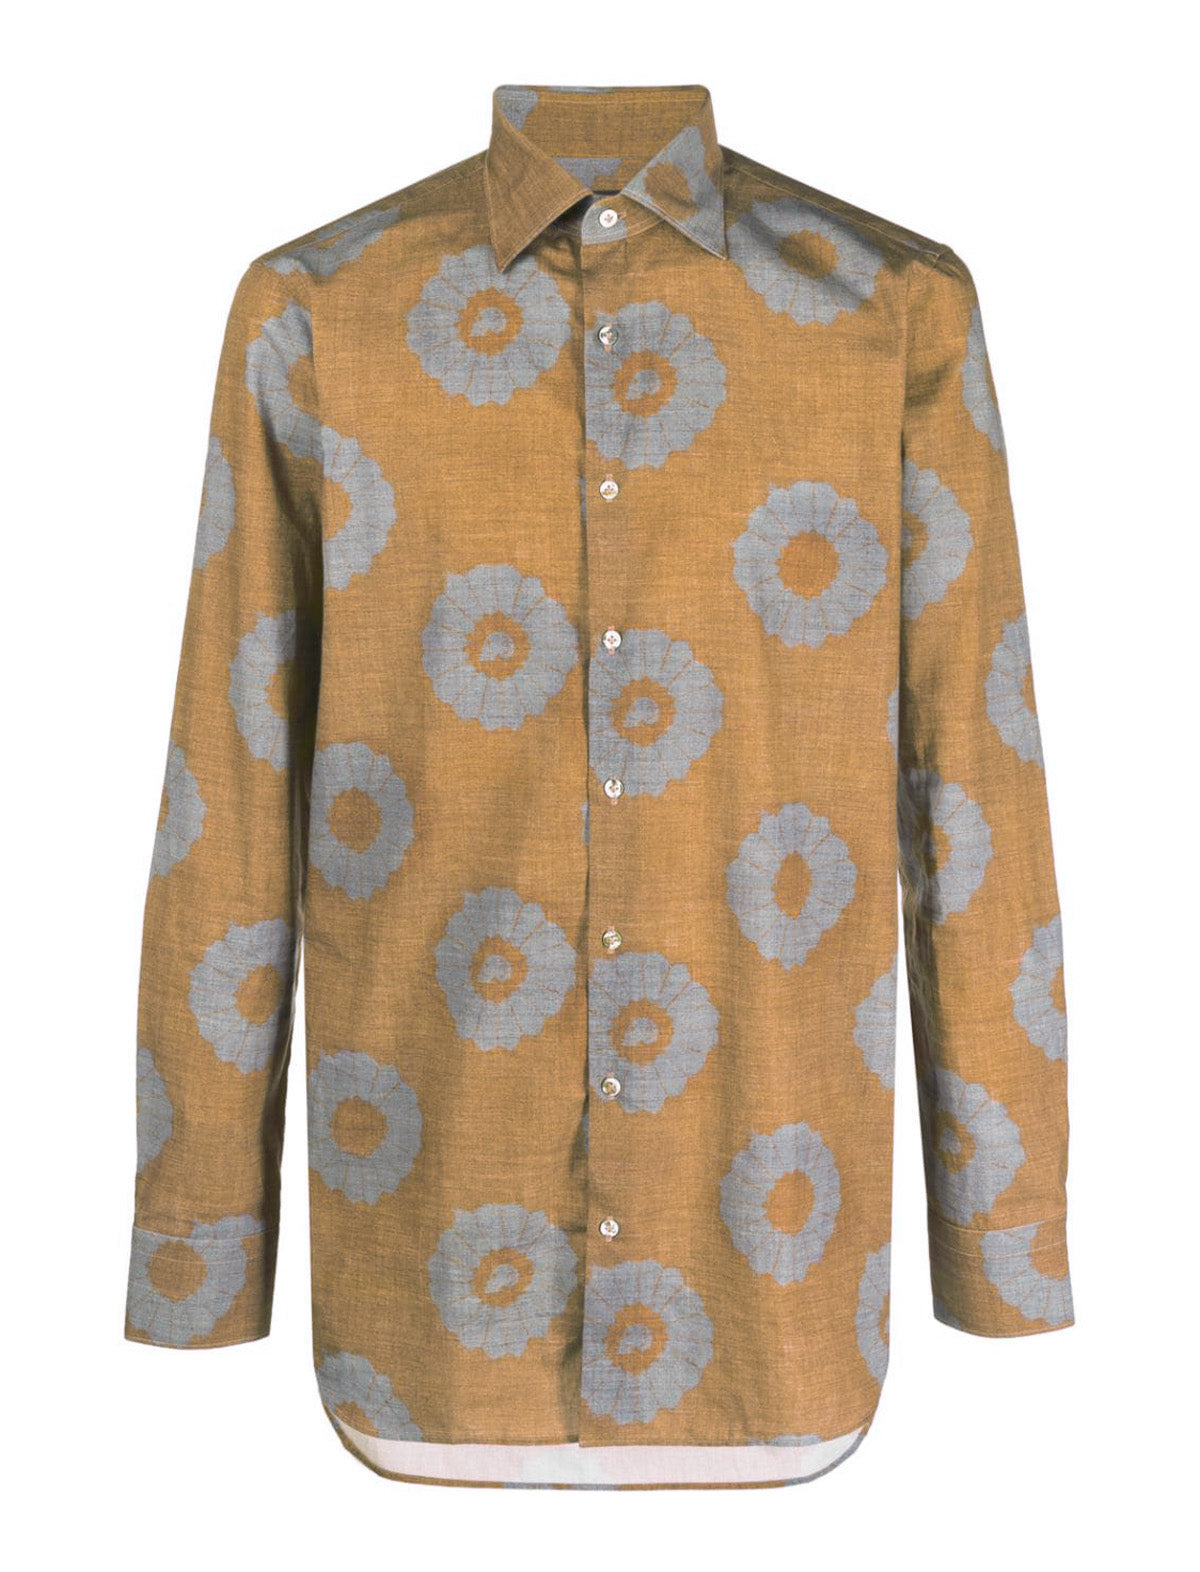 GABRIELE PASINI Italian Cotton Shirt in Brown Floral Print